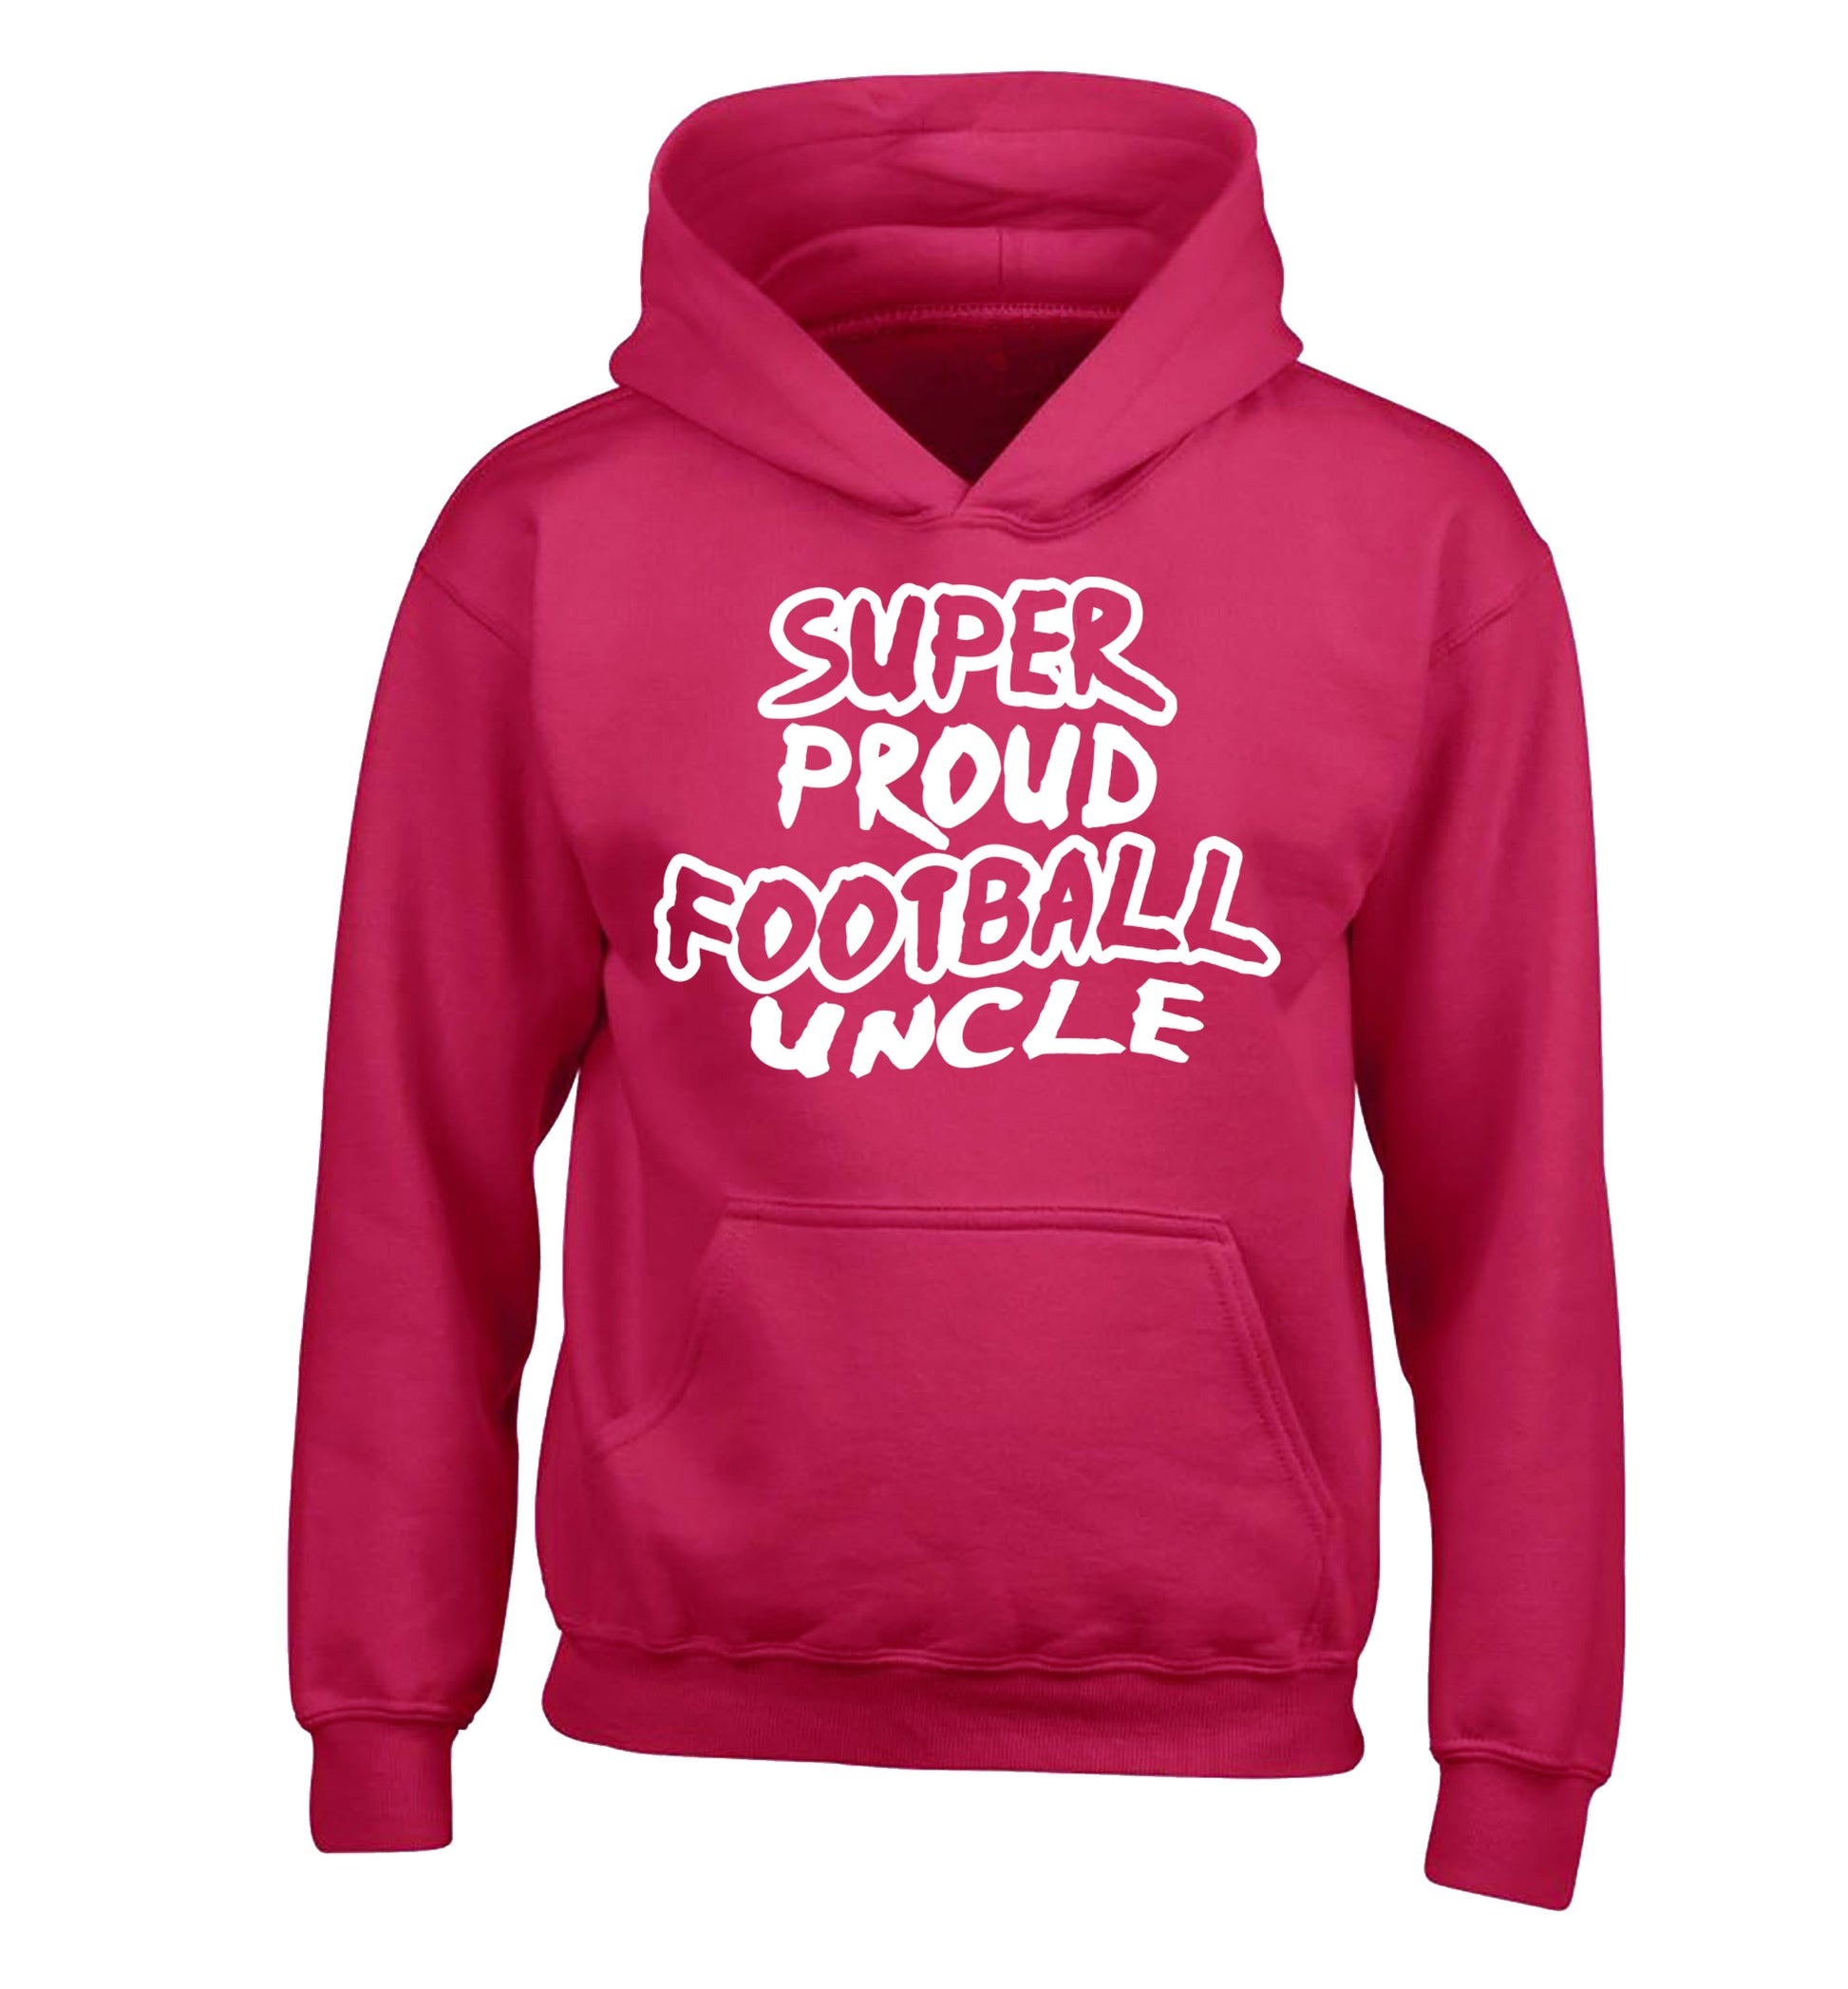 Super proud football uncle children's pink hoodie 12-14 Years